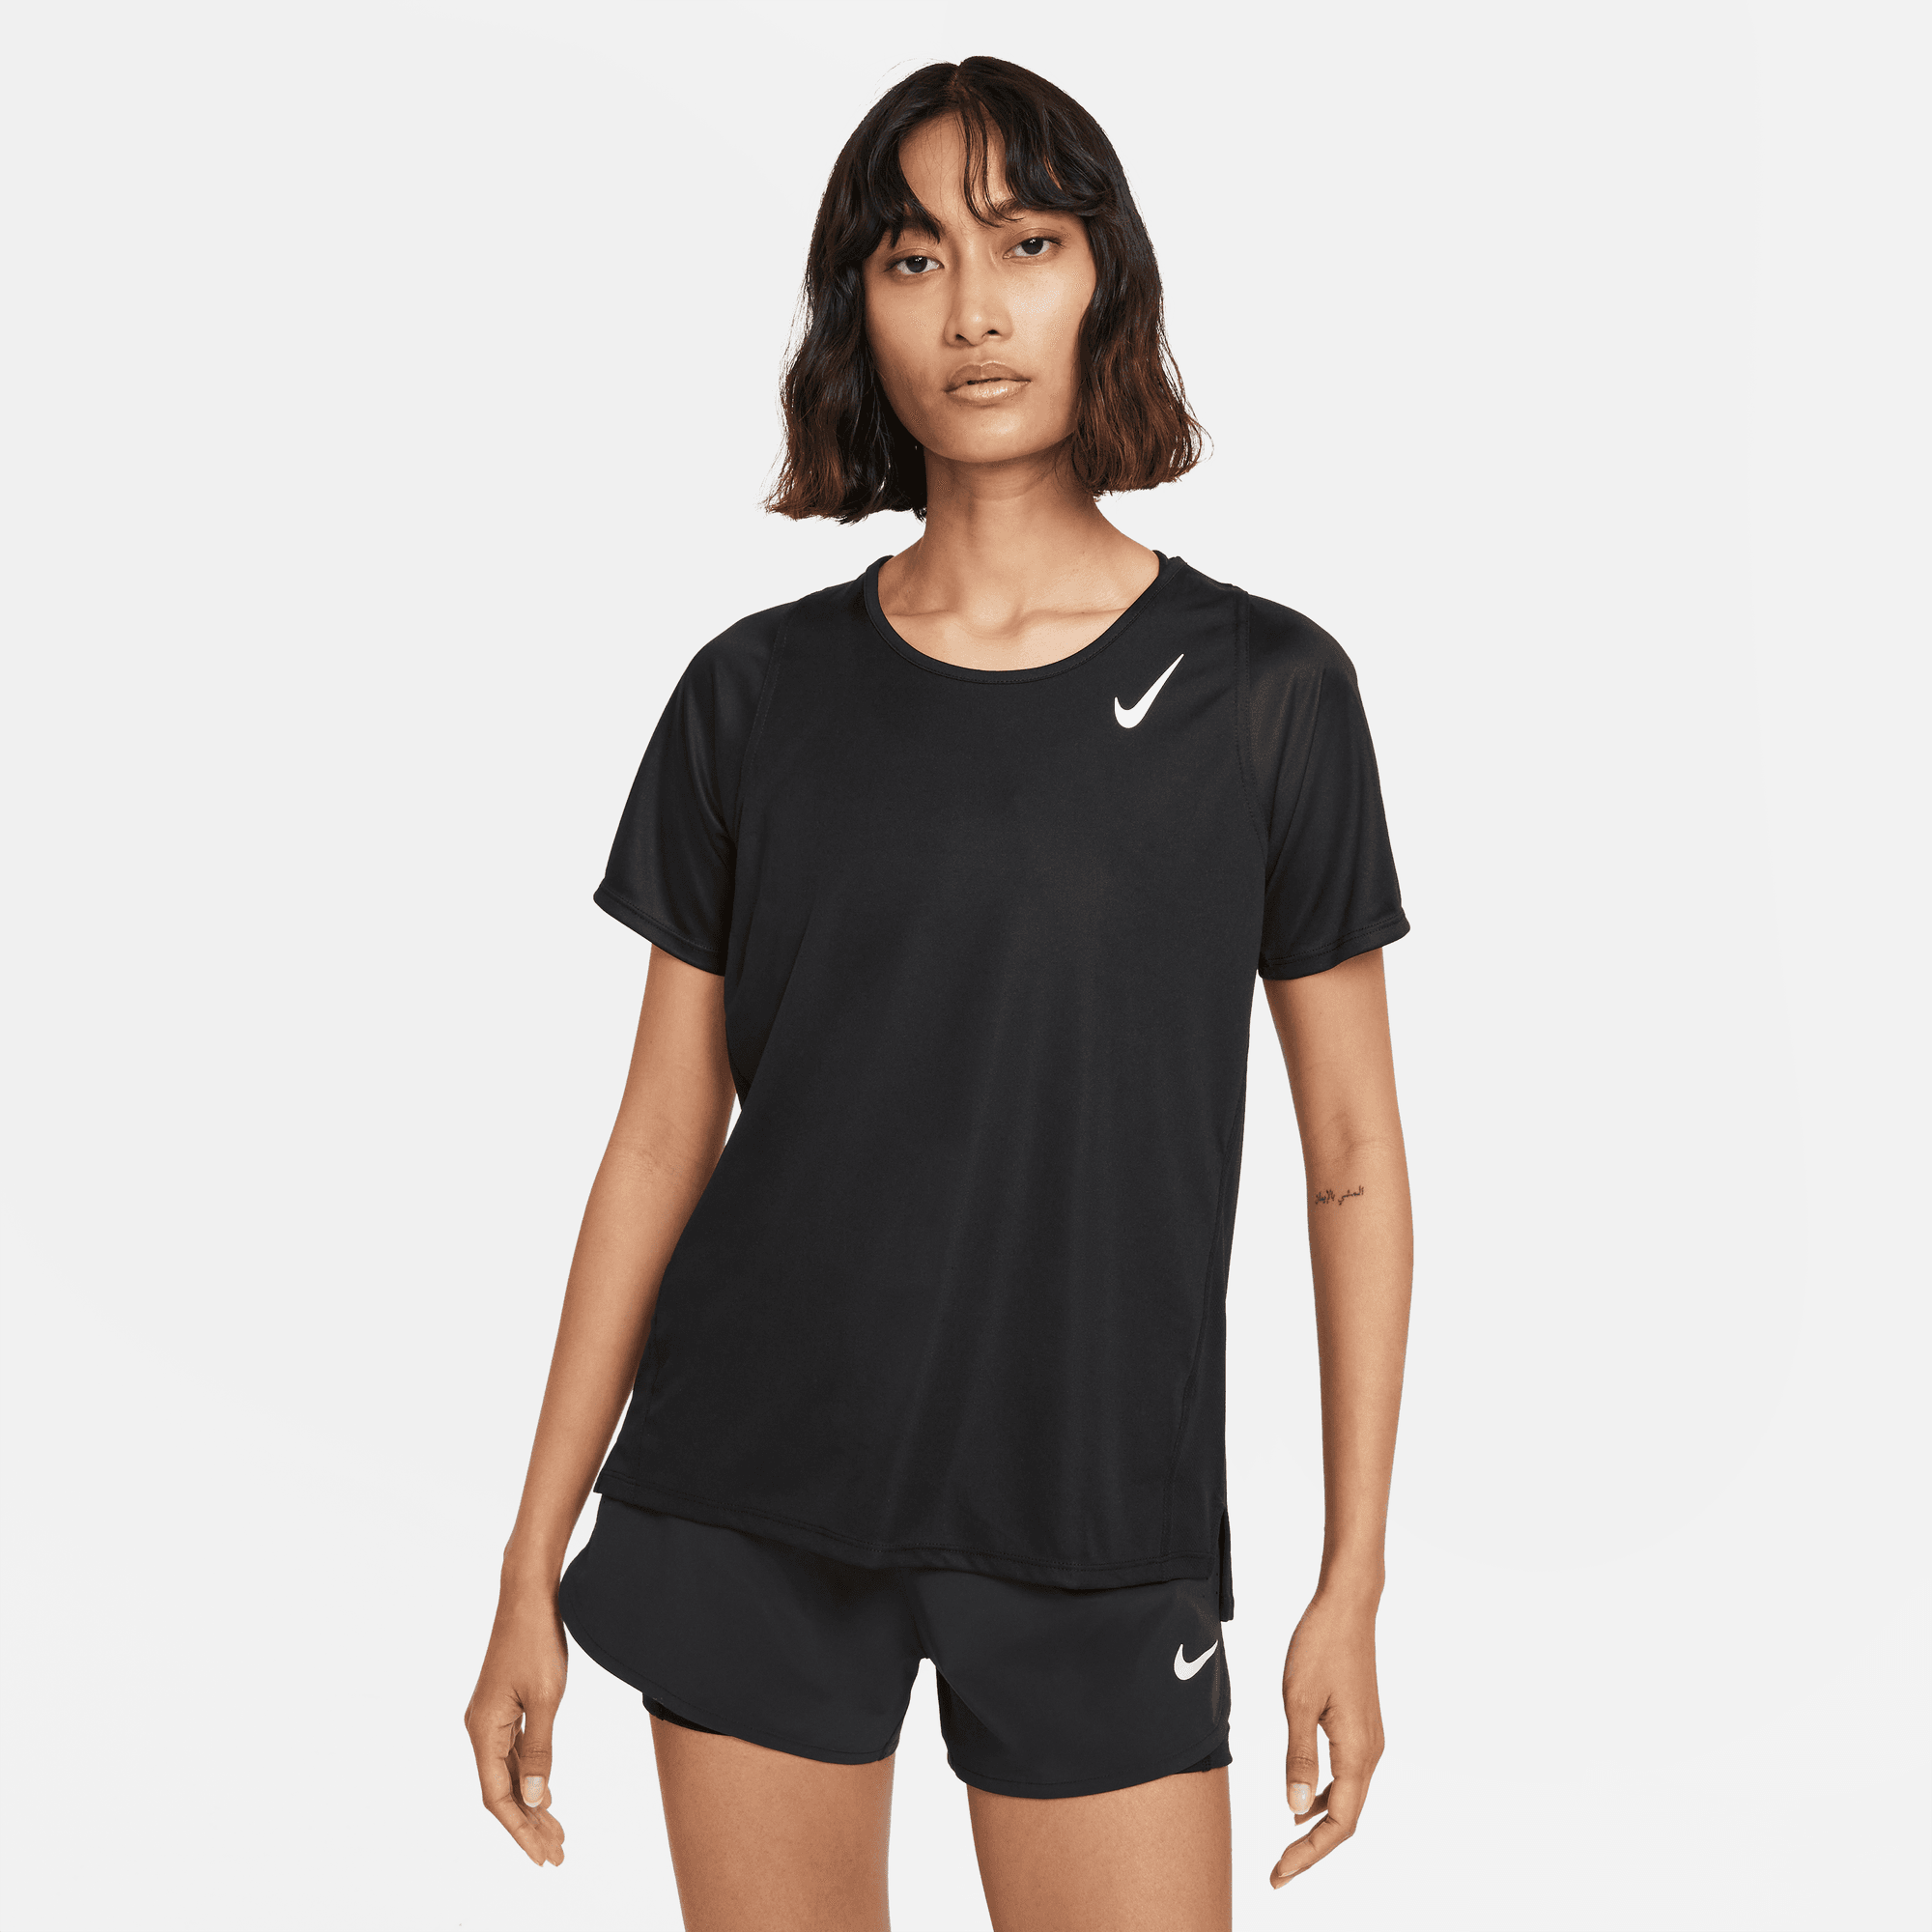 T-shirt Nike Performance Race Top Feminina